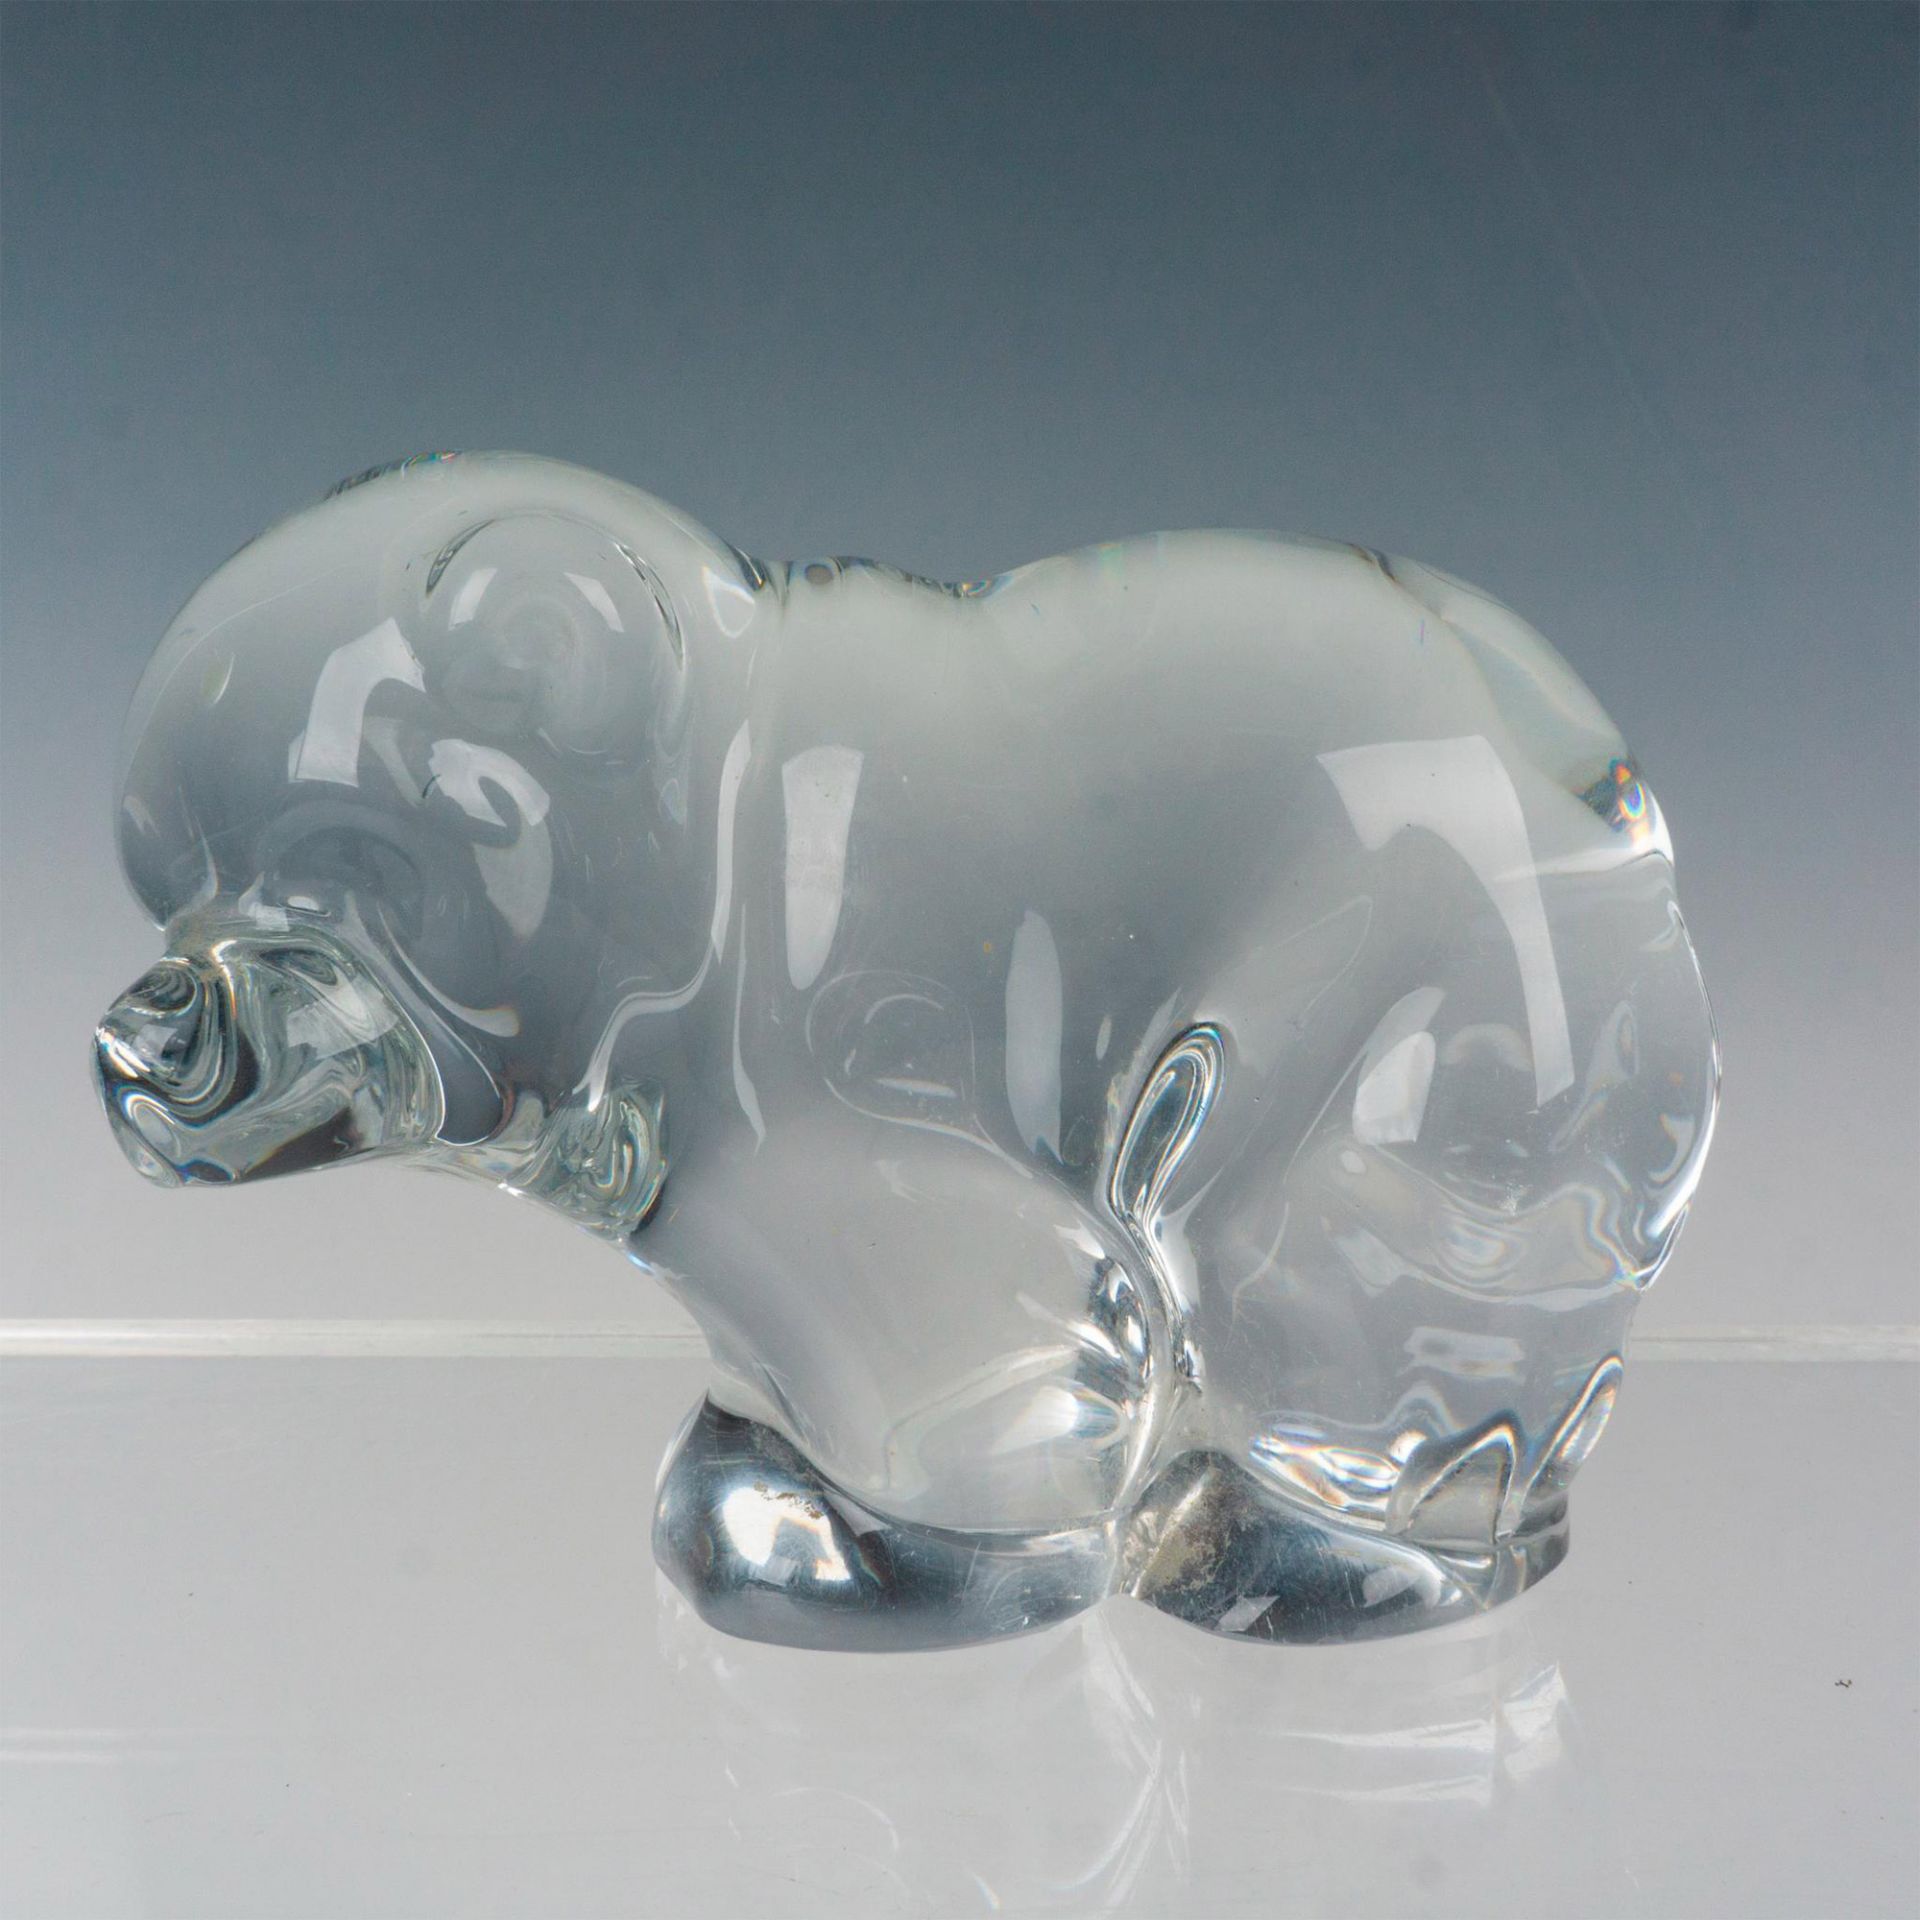 New Martinsville Crystal Figurine, Baby Bear